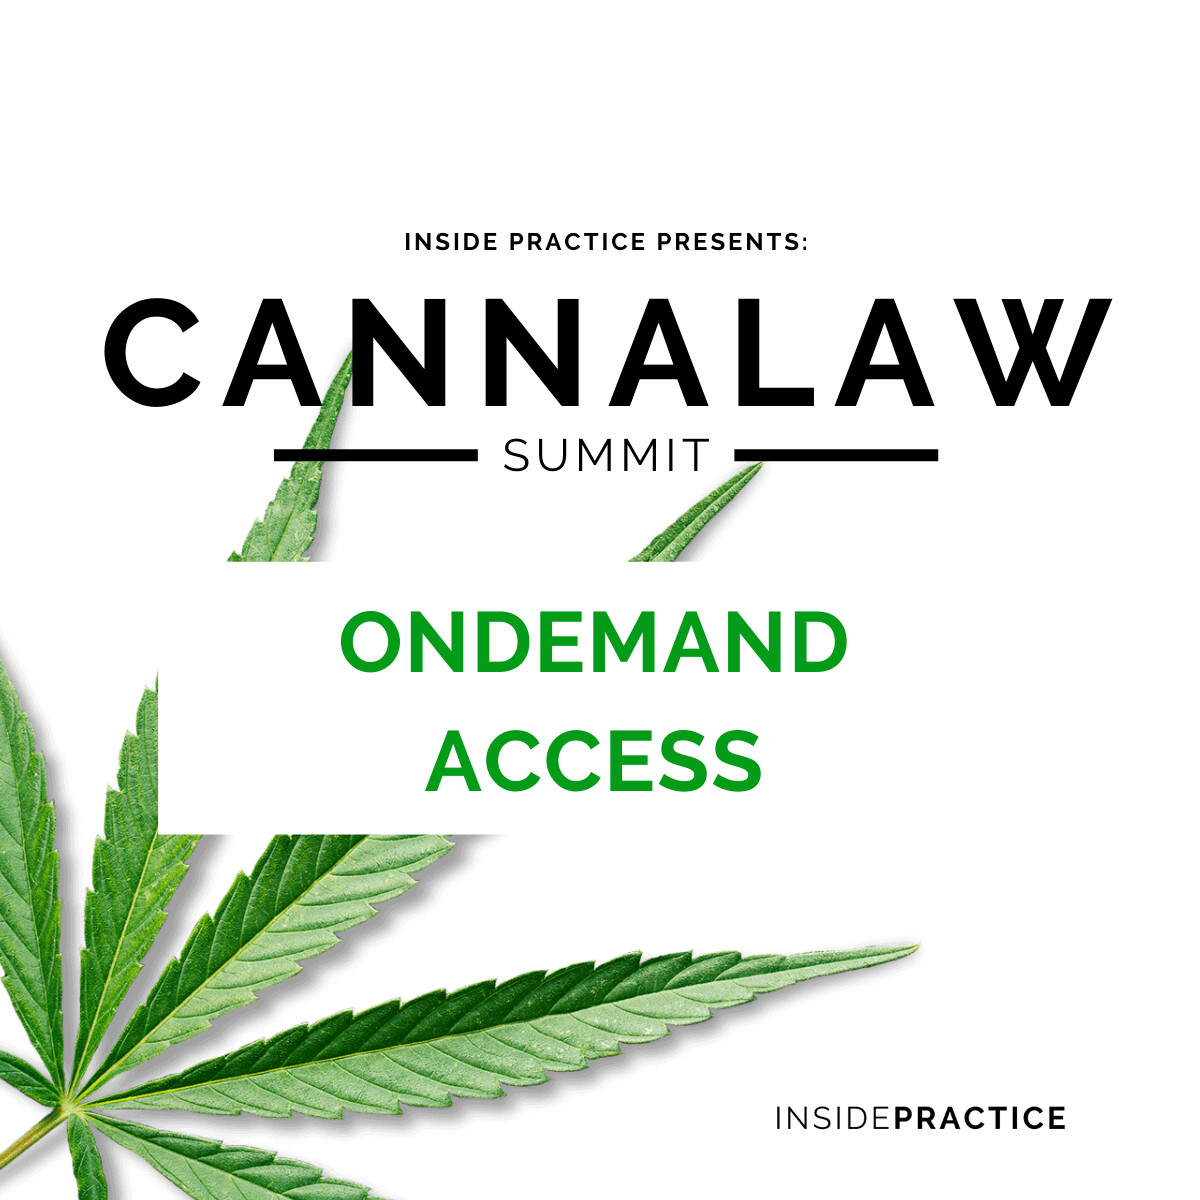 Cannalaw Summit 2021 On Demand Access